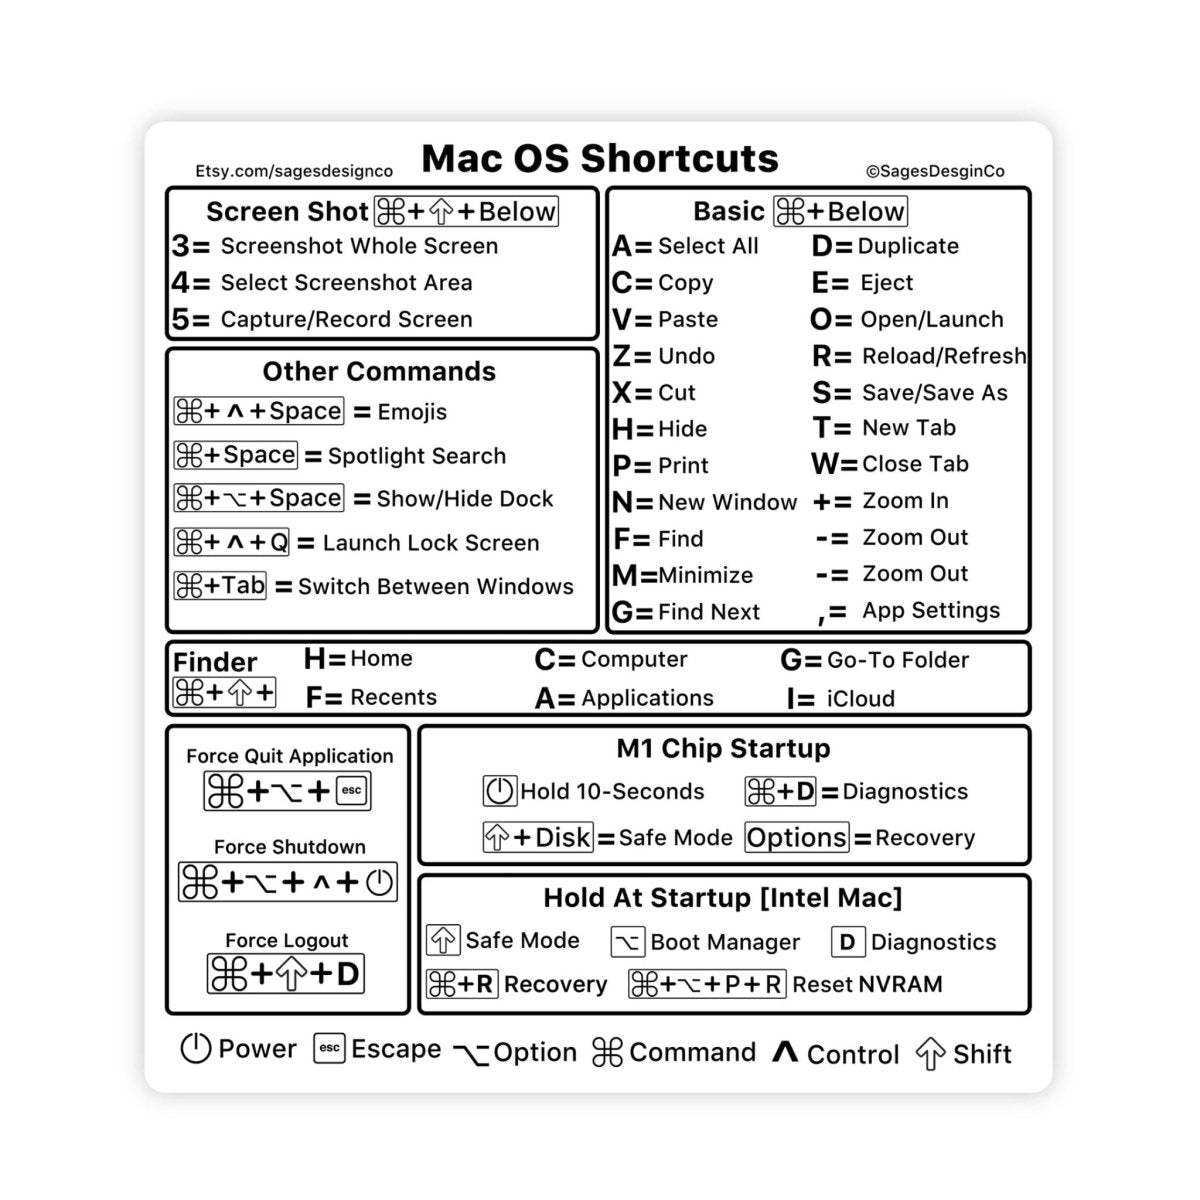 [M1/M2/Intel] Pastel Mac OS Shortcut Sticker [Works With All Mac Laptops] - stickerbull[M1/M2/Intel] Pastel Mac OS Shortcut Sticker [Works With All Mac Laptops]Retail StickerstickerbullstickerbullTaylor_ClearMac [#79]Clear[M1/M2/Intel] Pastel Mac OS Shortcut Sticker [Works With All Mac Laptops]